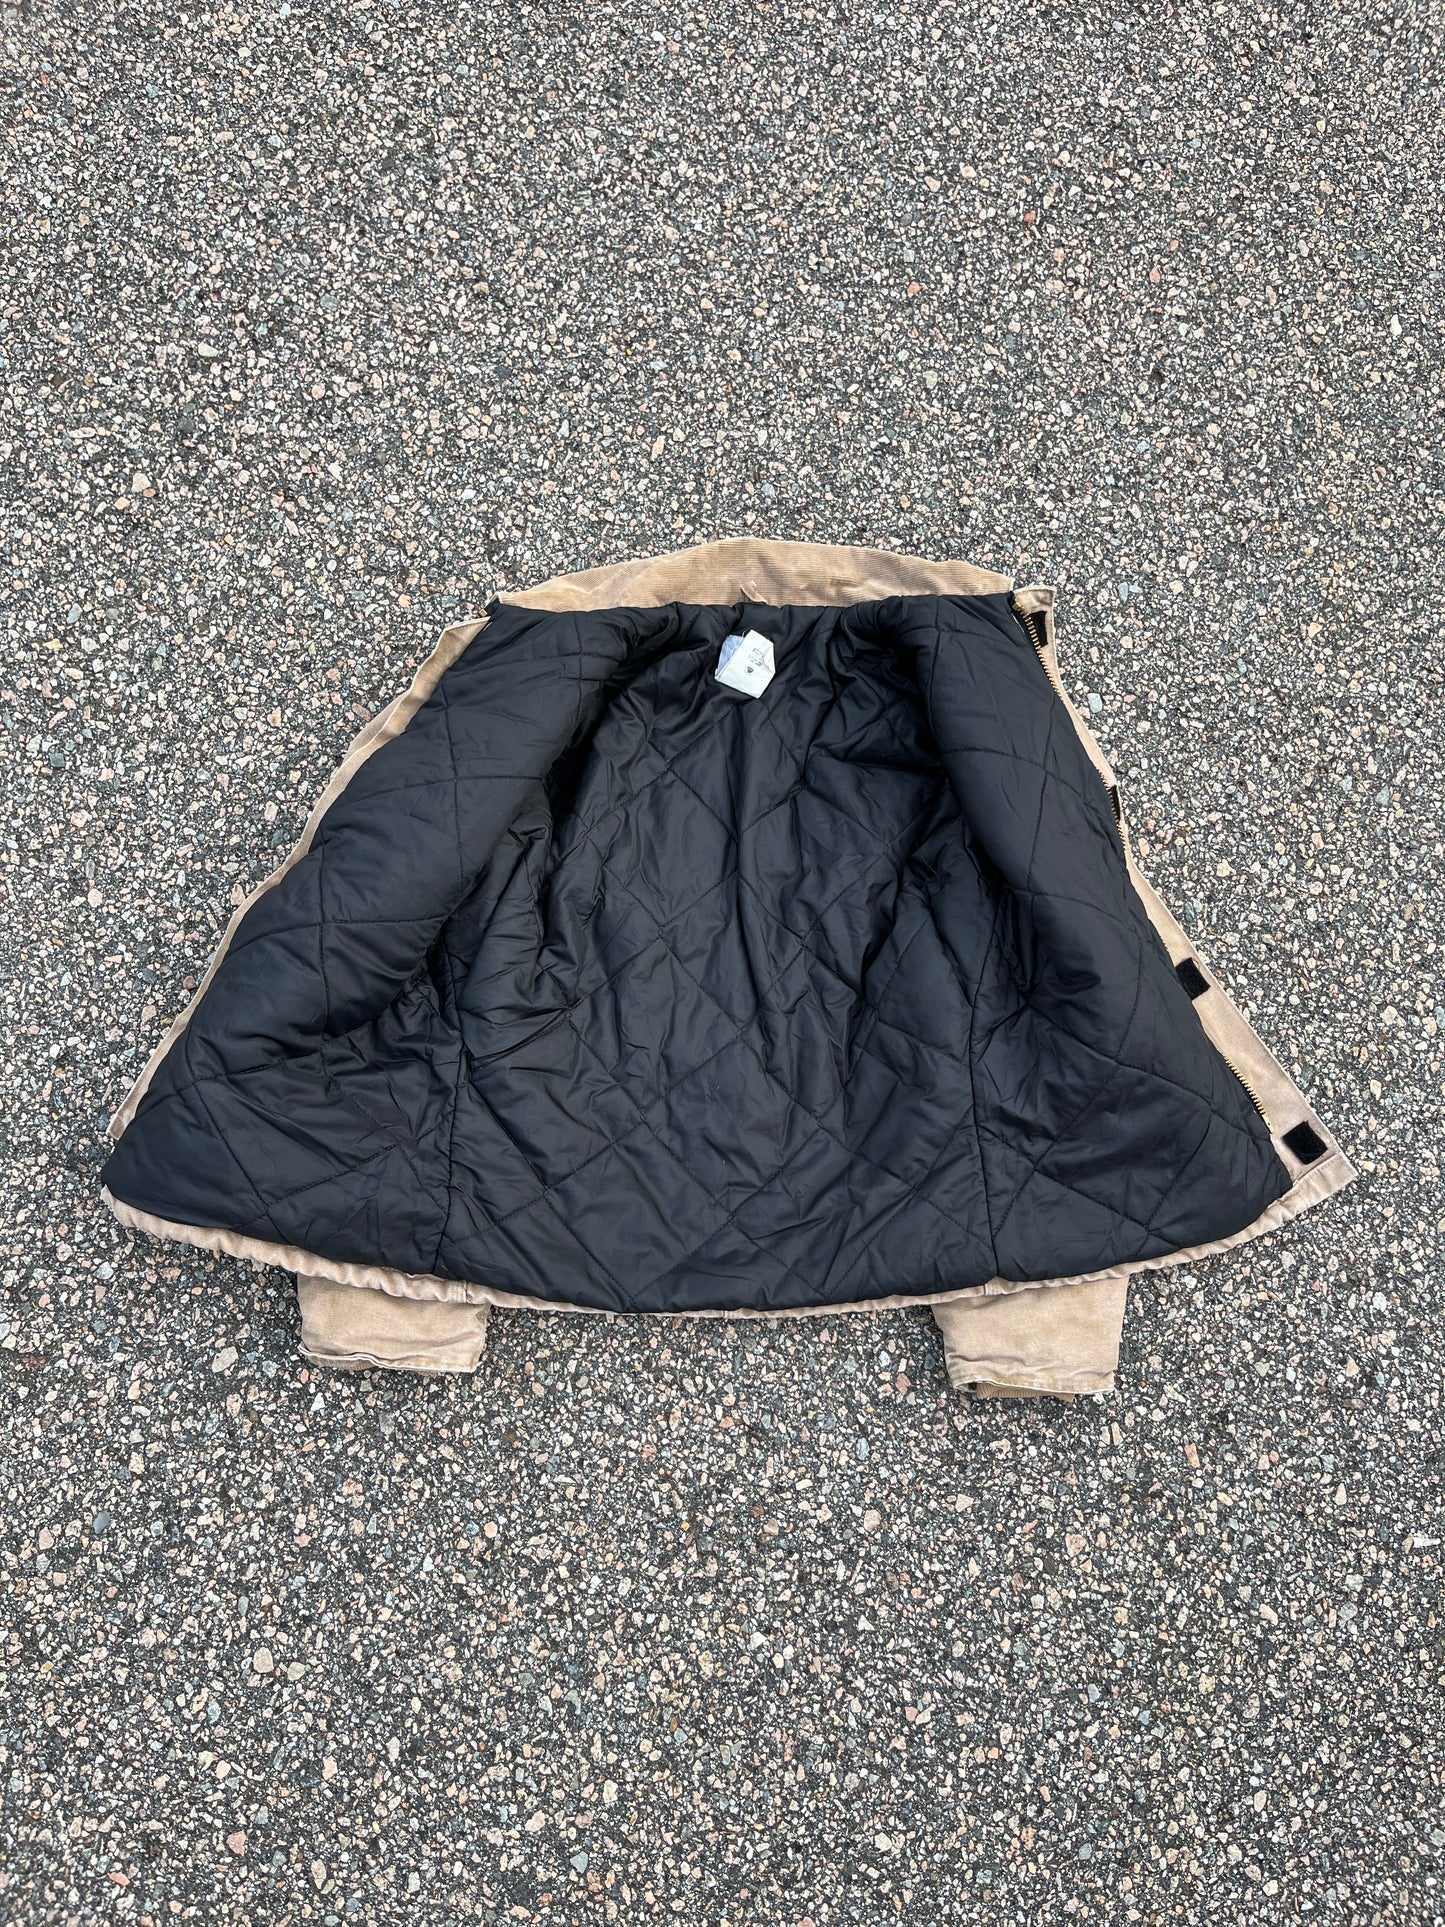 Faded Beige Carhartt Arctic Jacket - Small